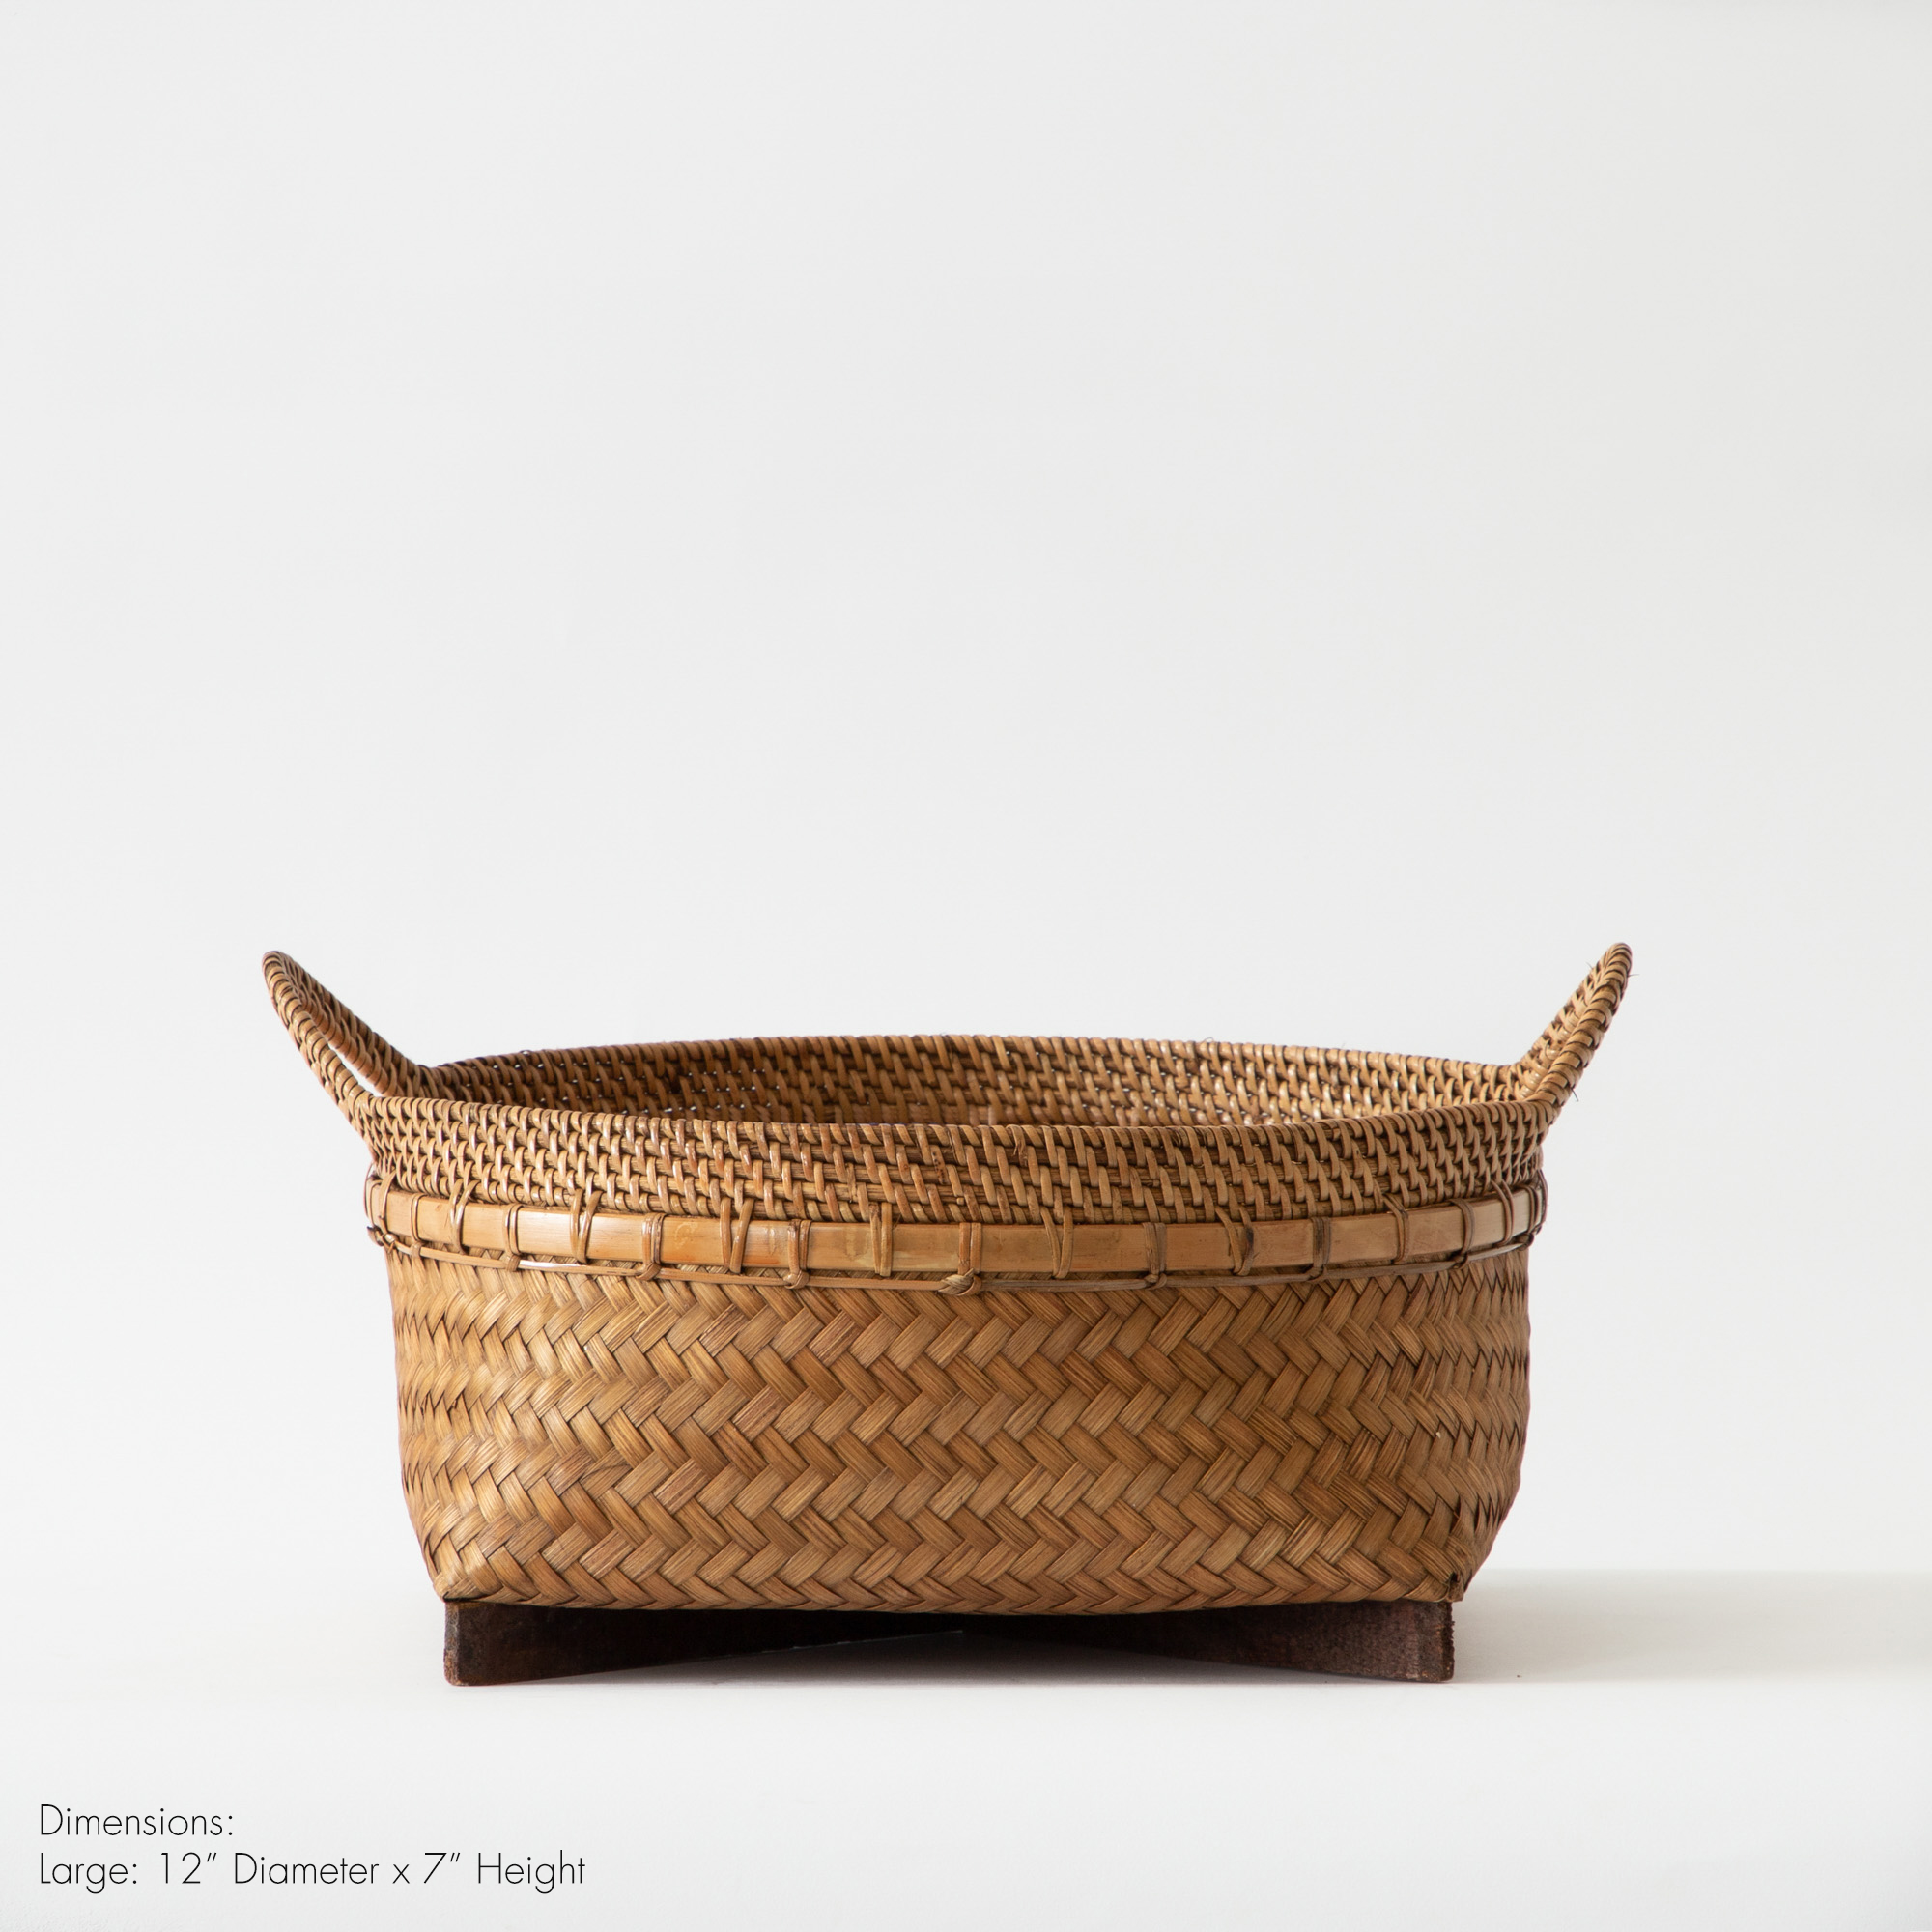 Art of Borneo - Fruit Basket